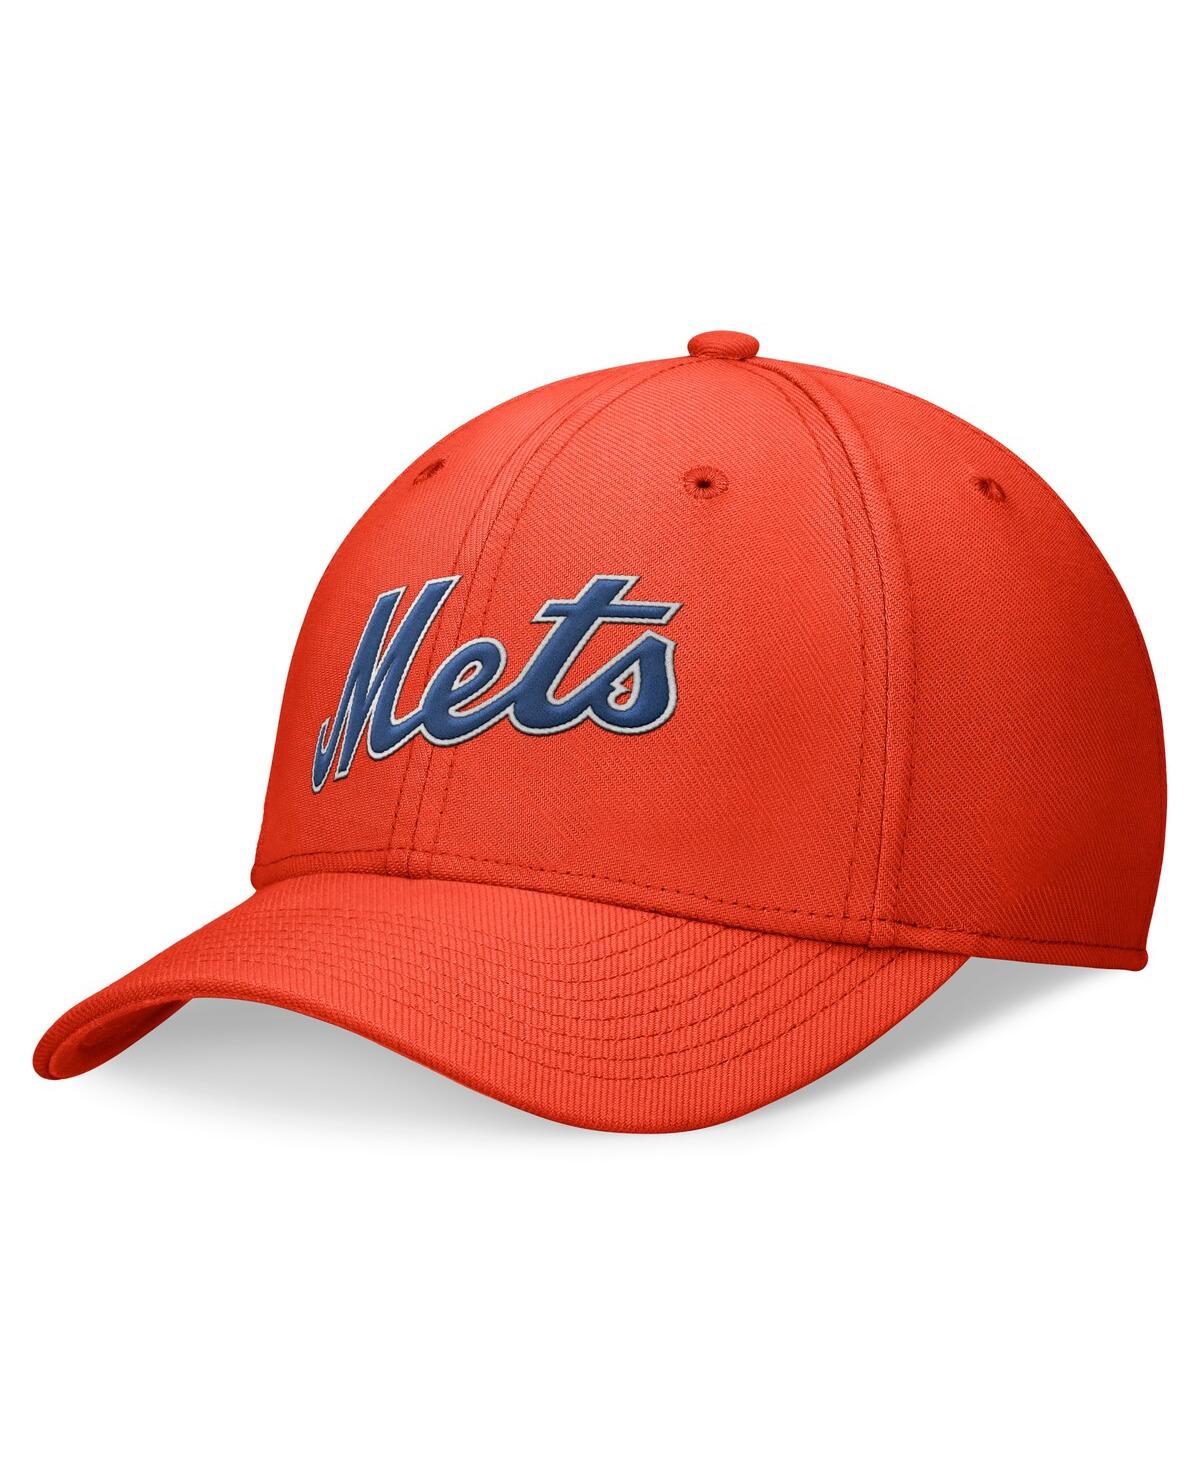 Nike Men's Orange New York Mets Evergreen Performance Flex Hat